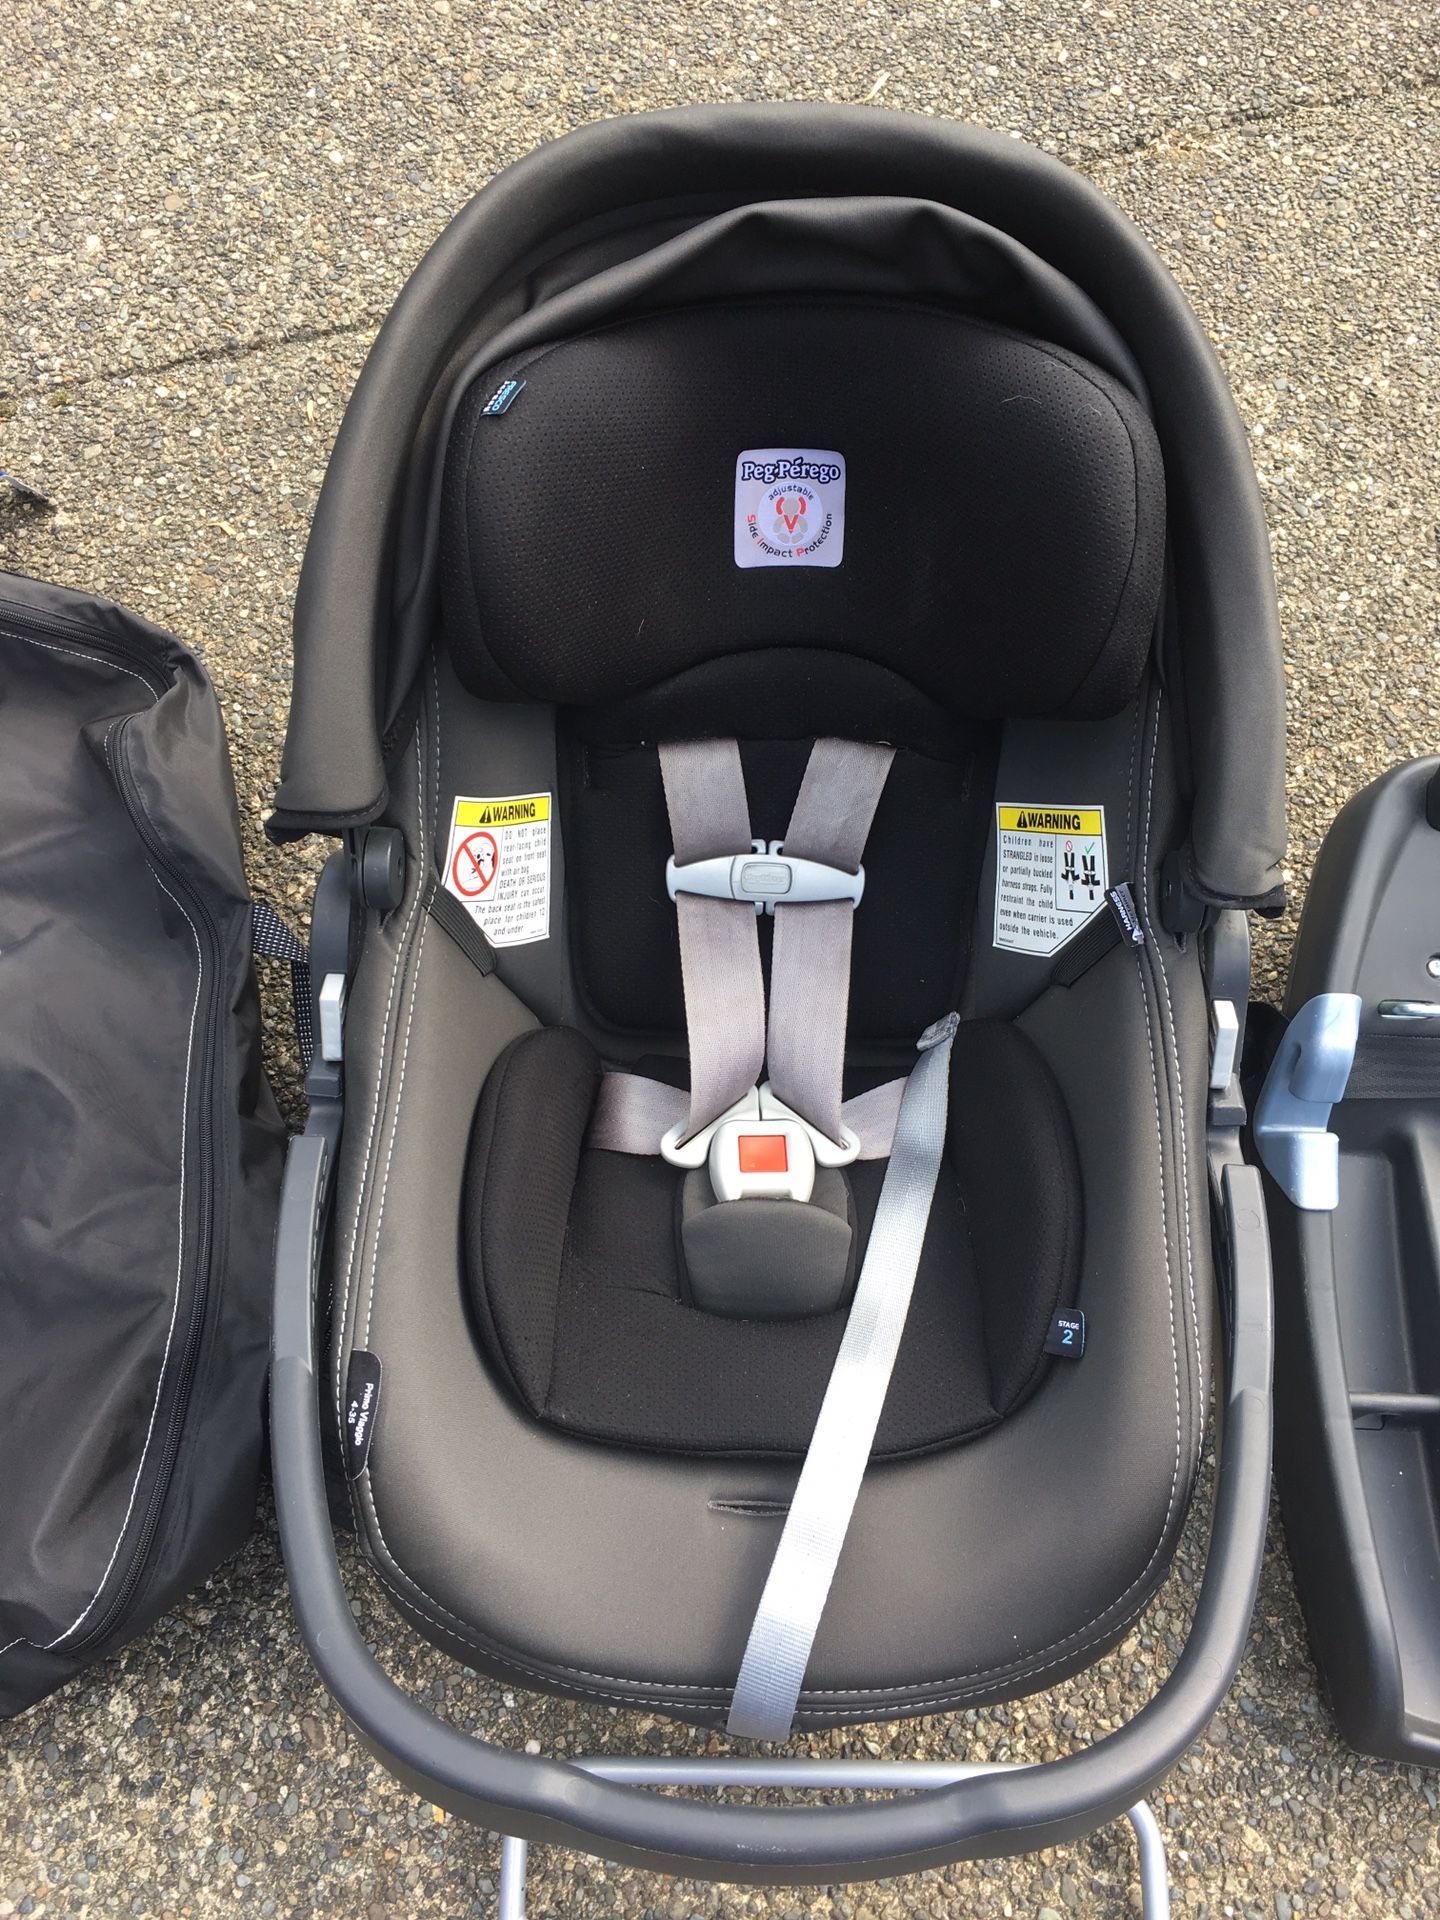 Peg perego infant car seat